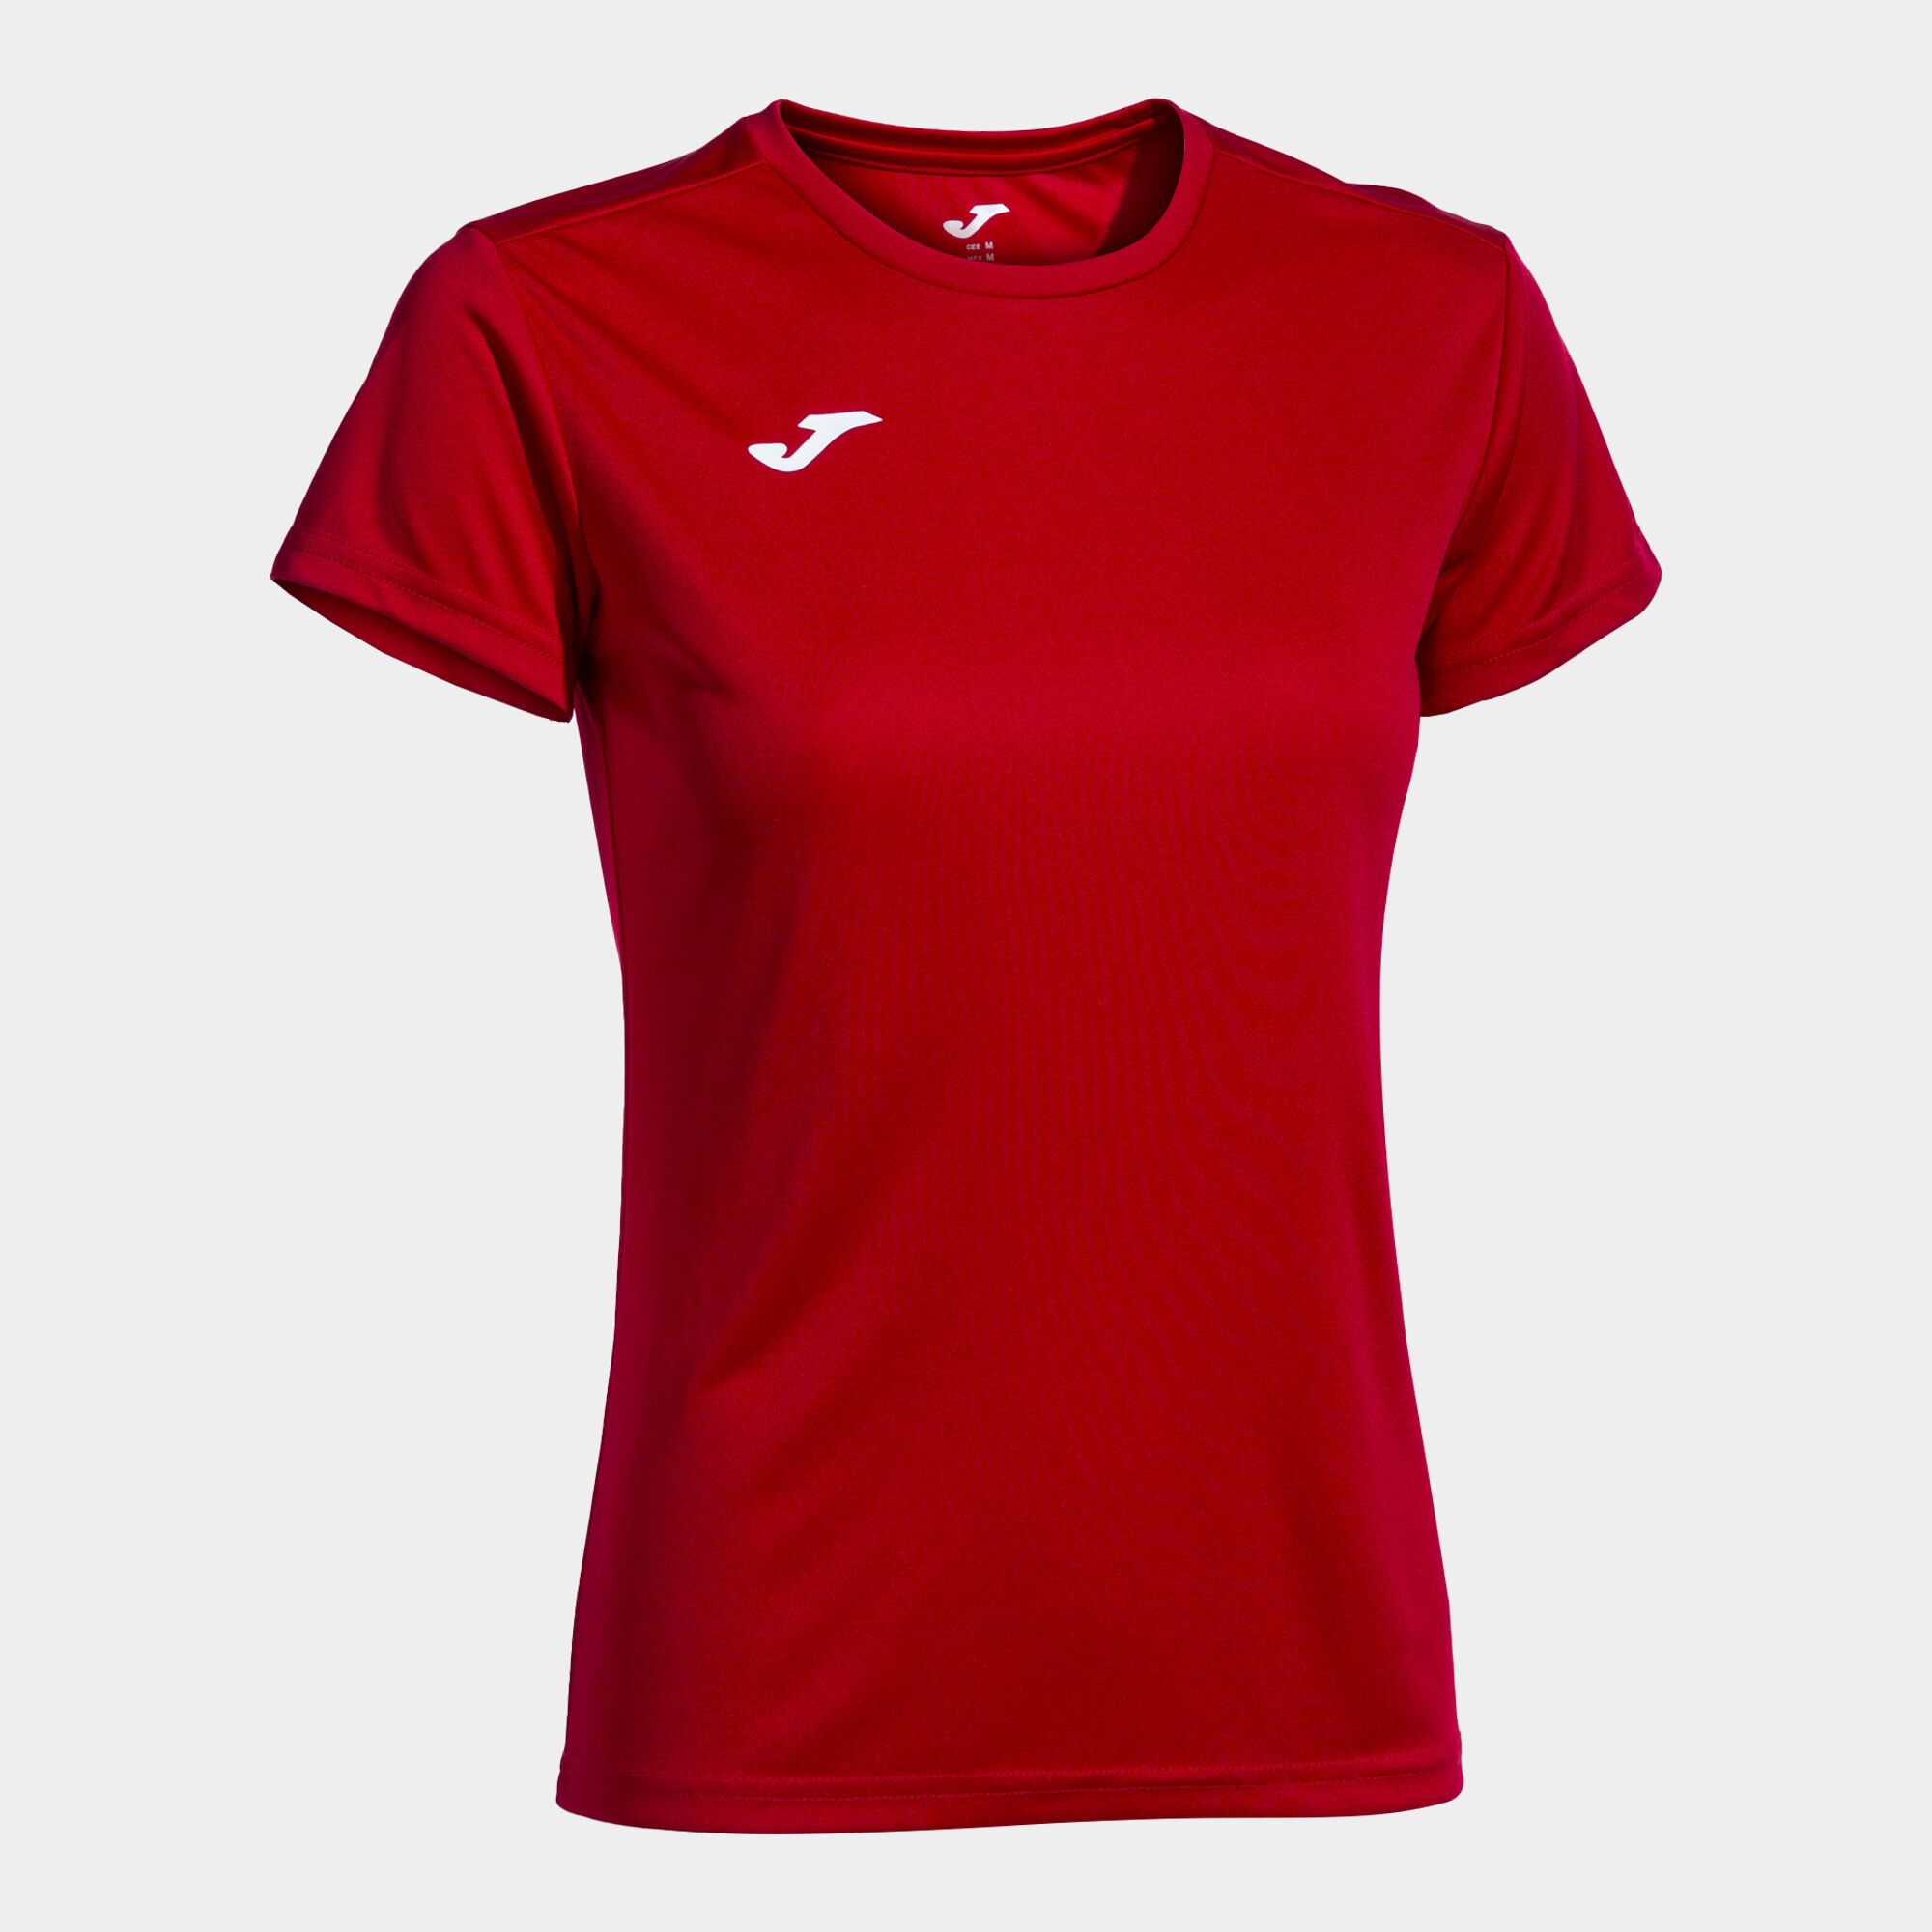 Camiseta manga corta mujer Combi rojo